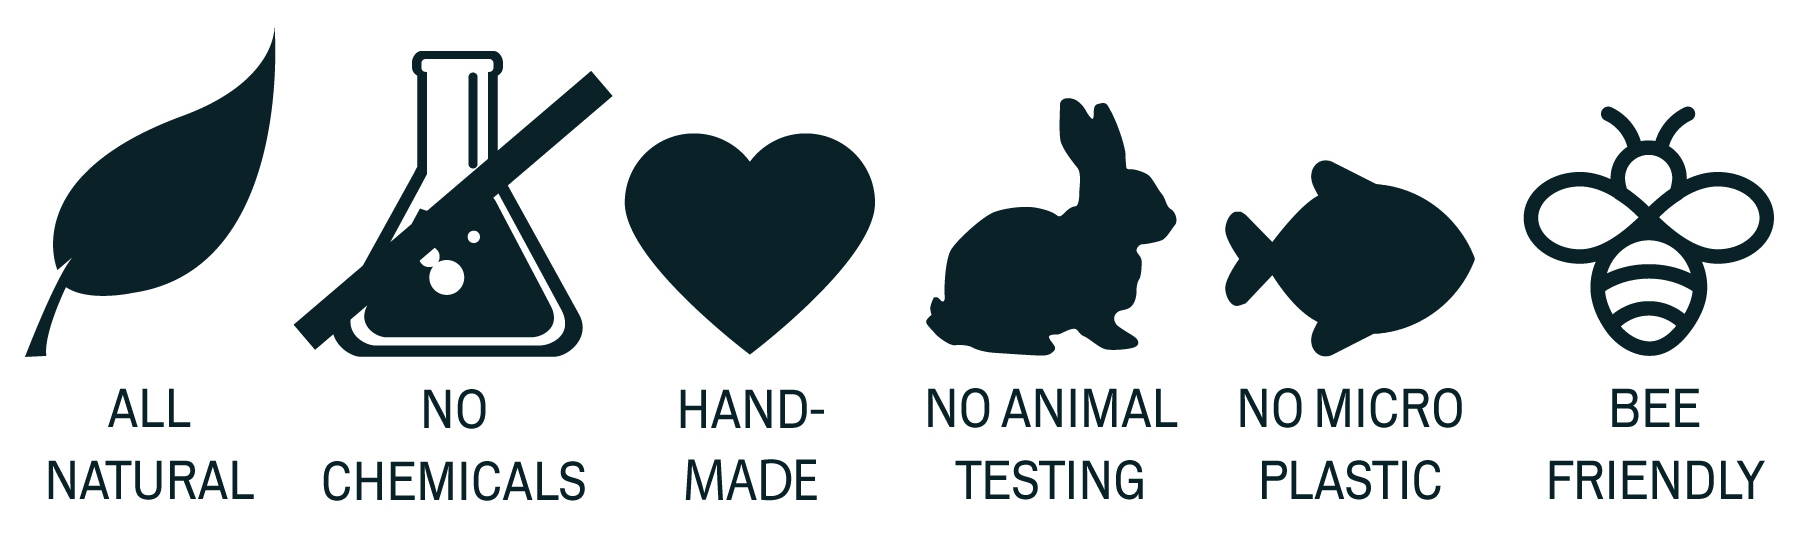 All natural, no chemicals, handmade, no animal testing, no micro plastic, bee friendly